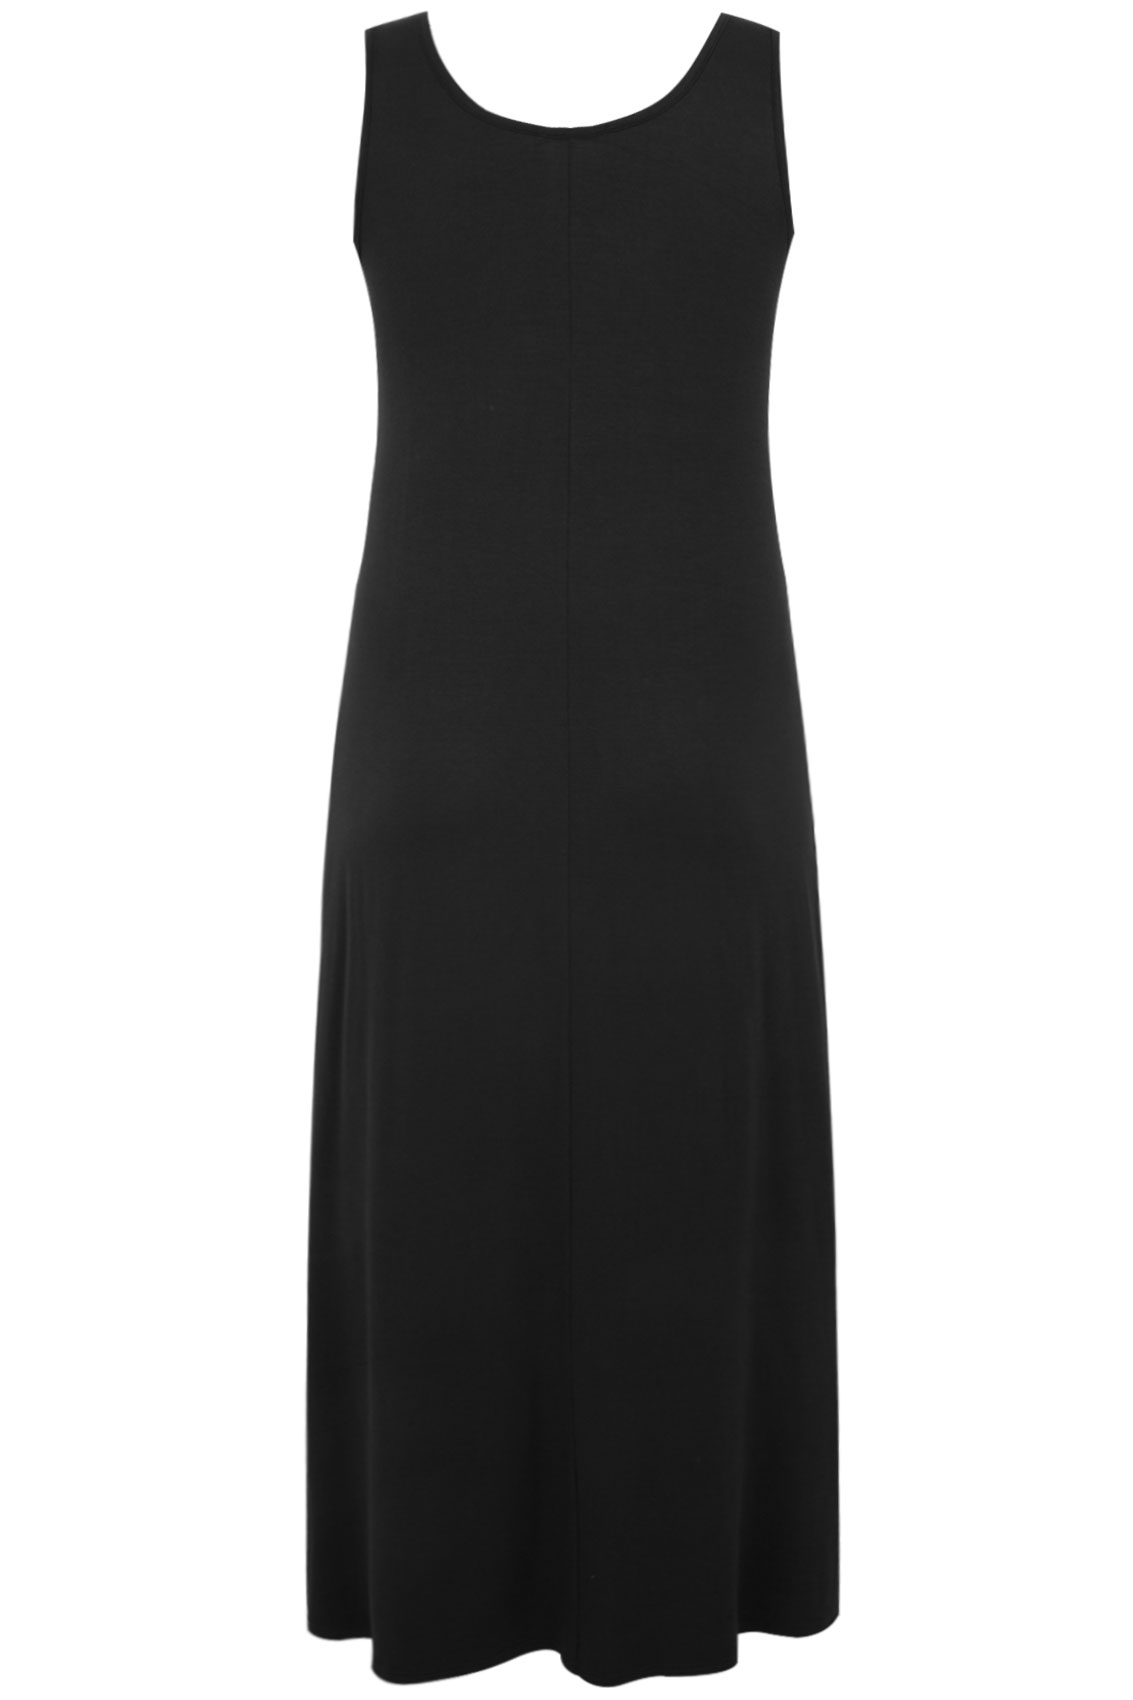 Black Sleeveless Maxi Dress plus size 16,18,20,22,24,26,28,30,32,34,36